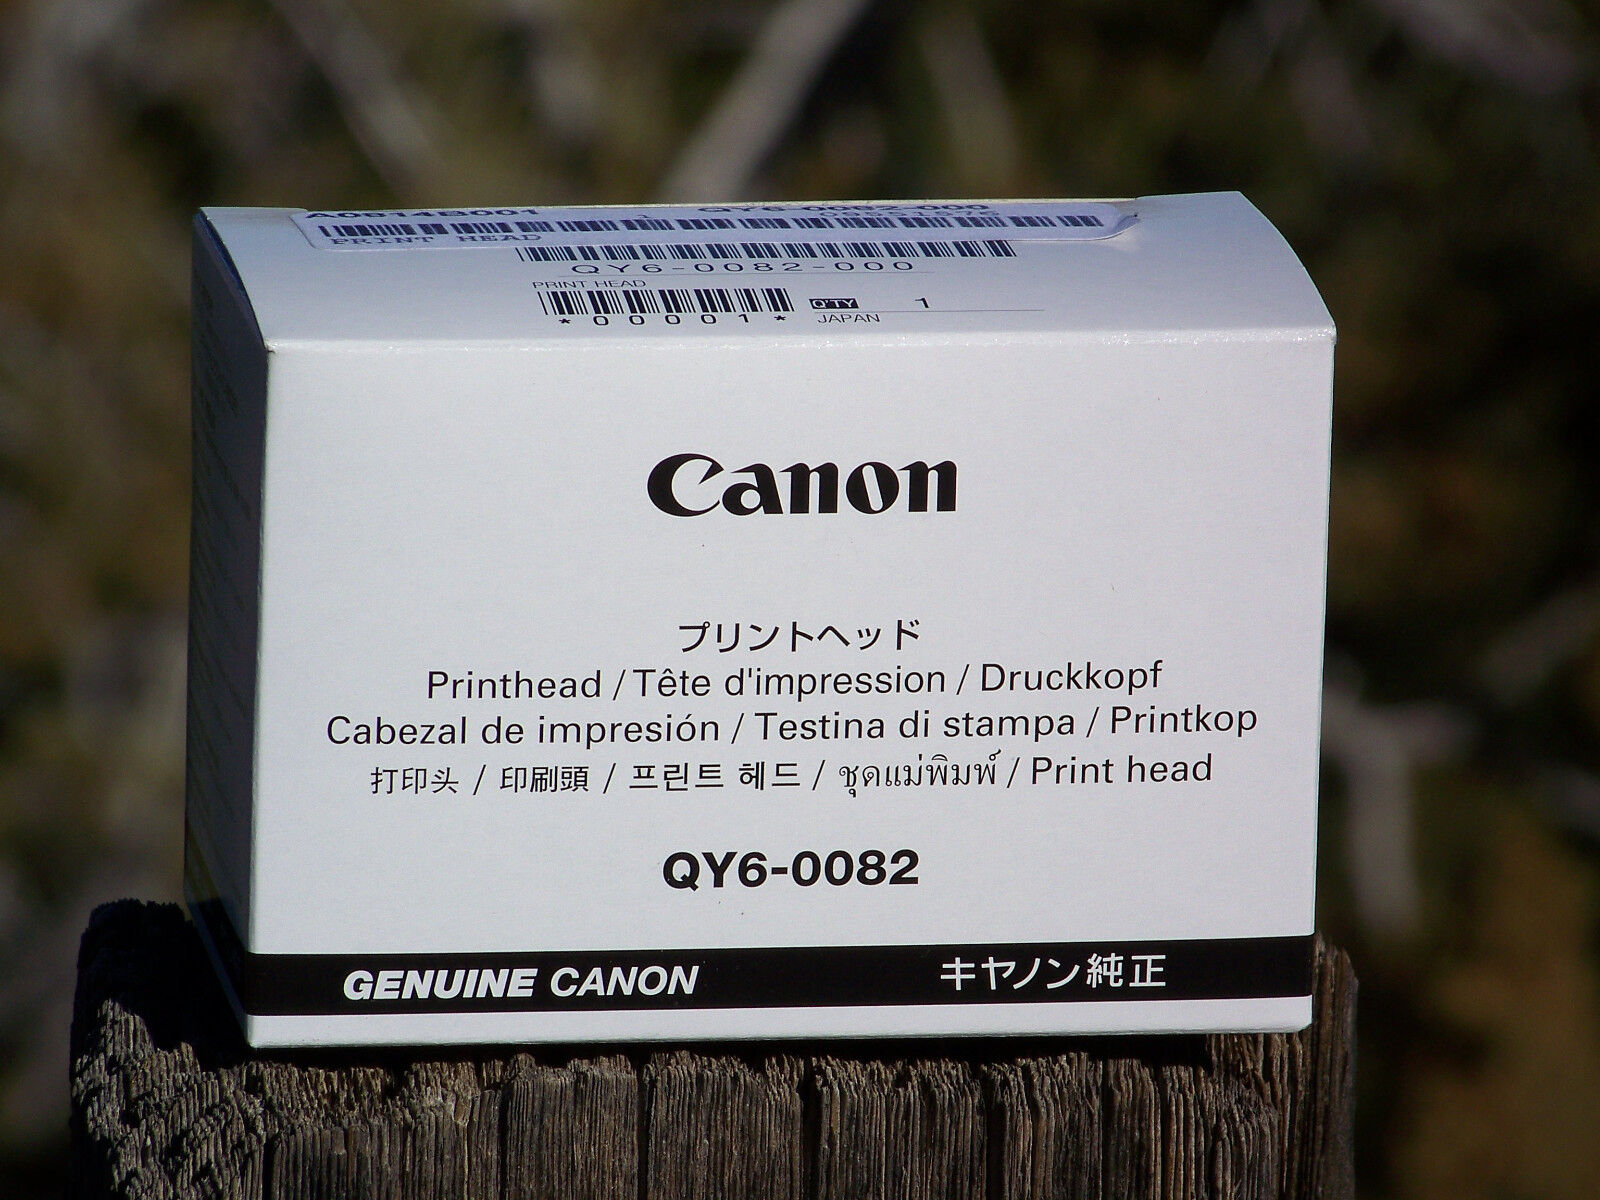 New Genuine Canon QY6-0082-010 printhead for iP7220 MG5420 MG5520 MG5620 MG5720